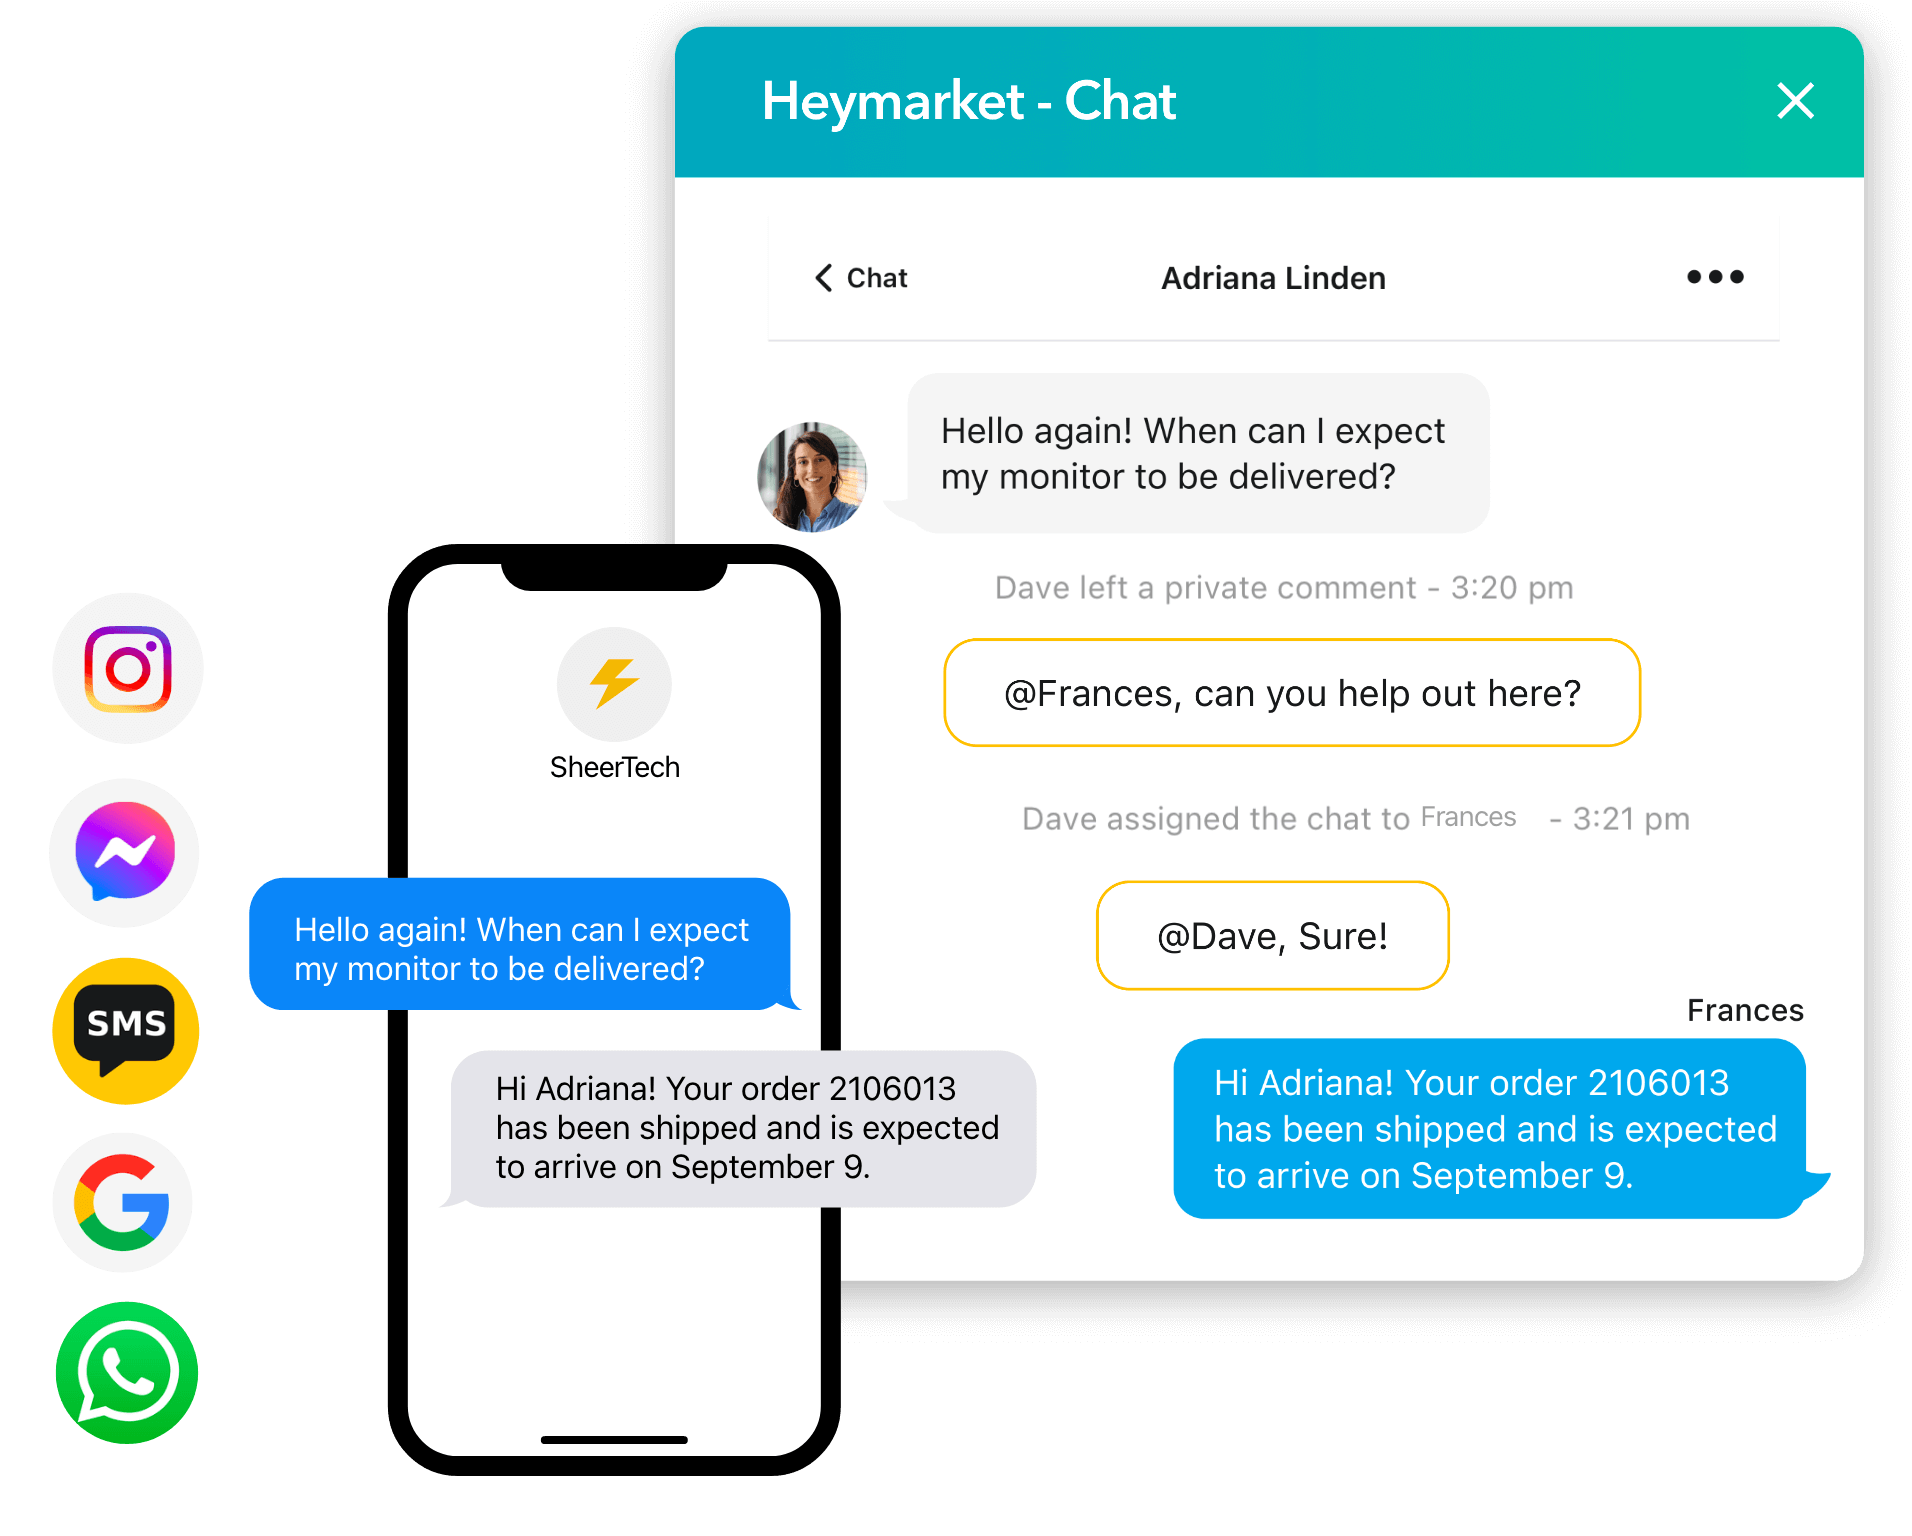 Heymarket's HubSpot integration supports omnichannel messaging